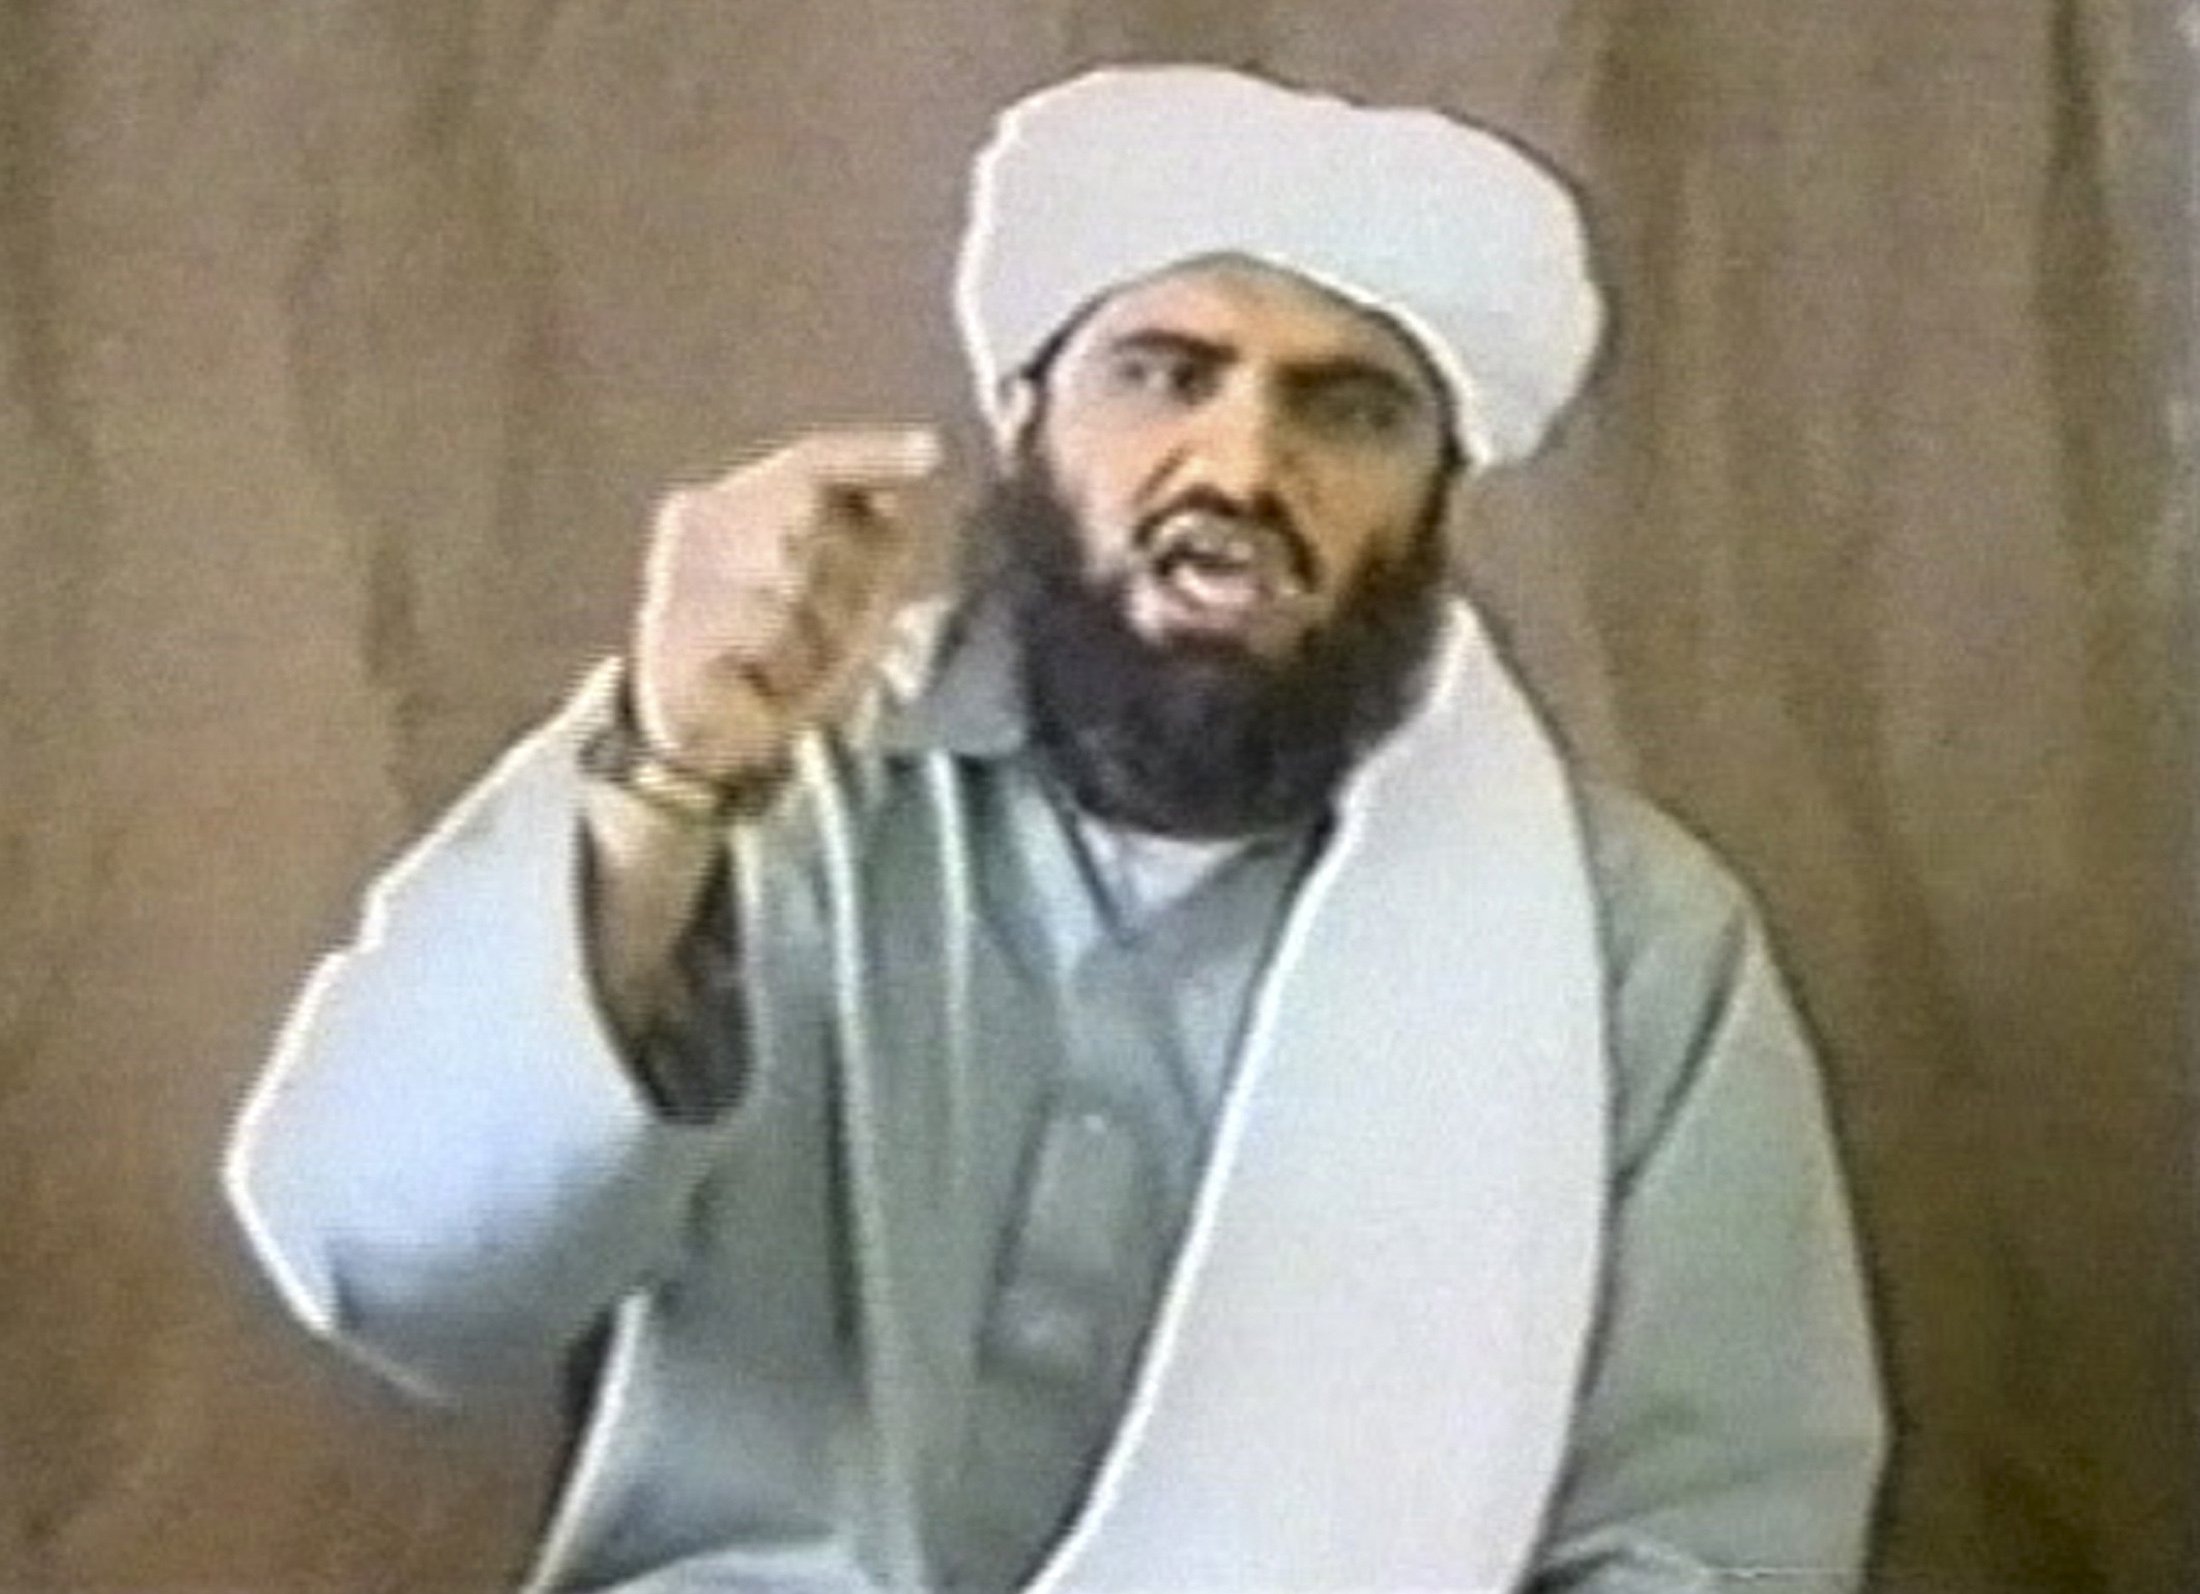 Still image taken from an undated video of Suleiman Abu Ghaith